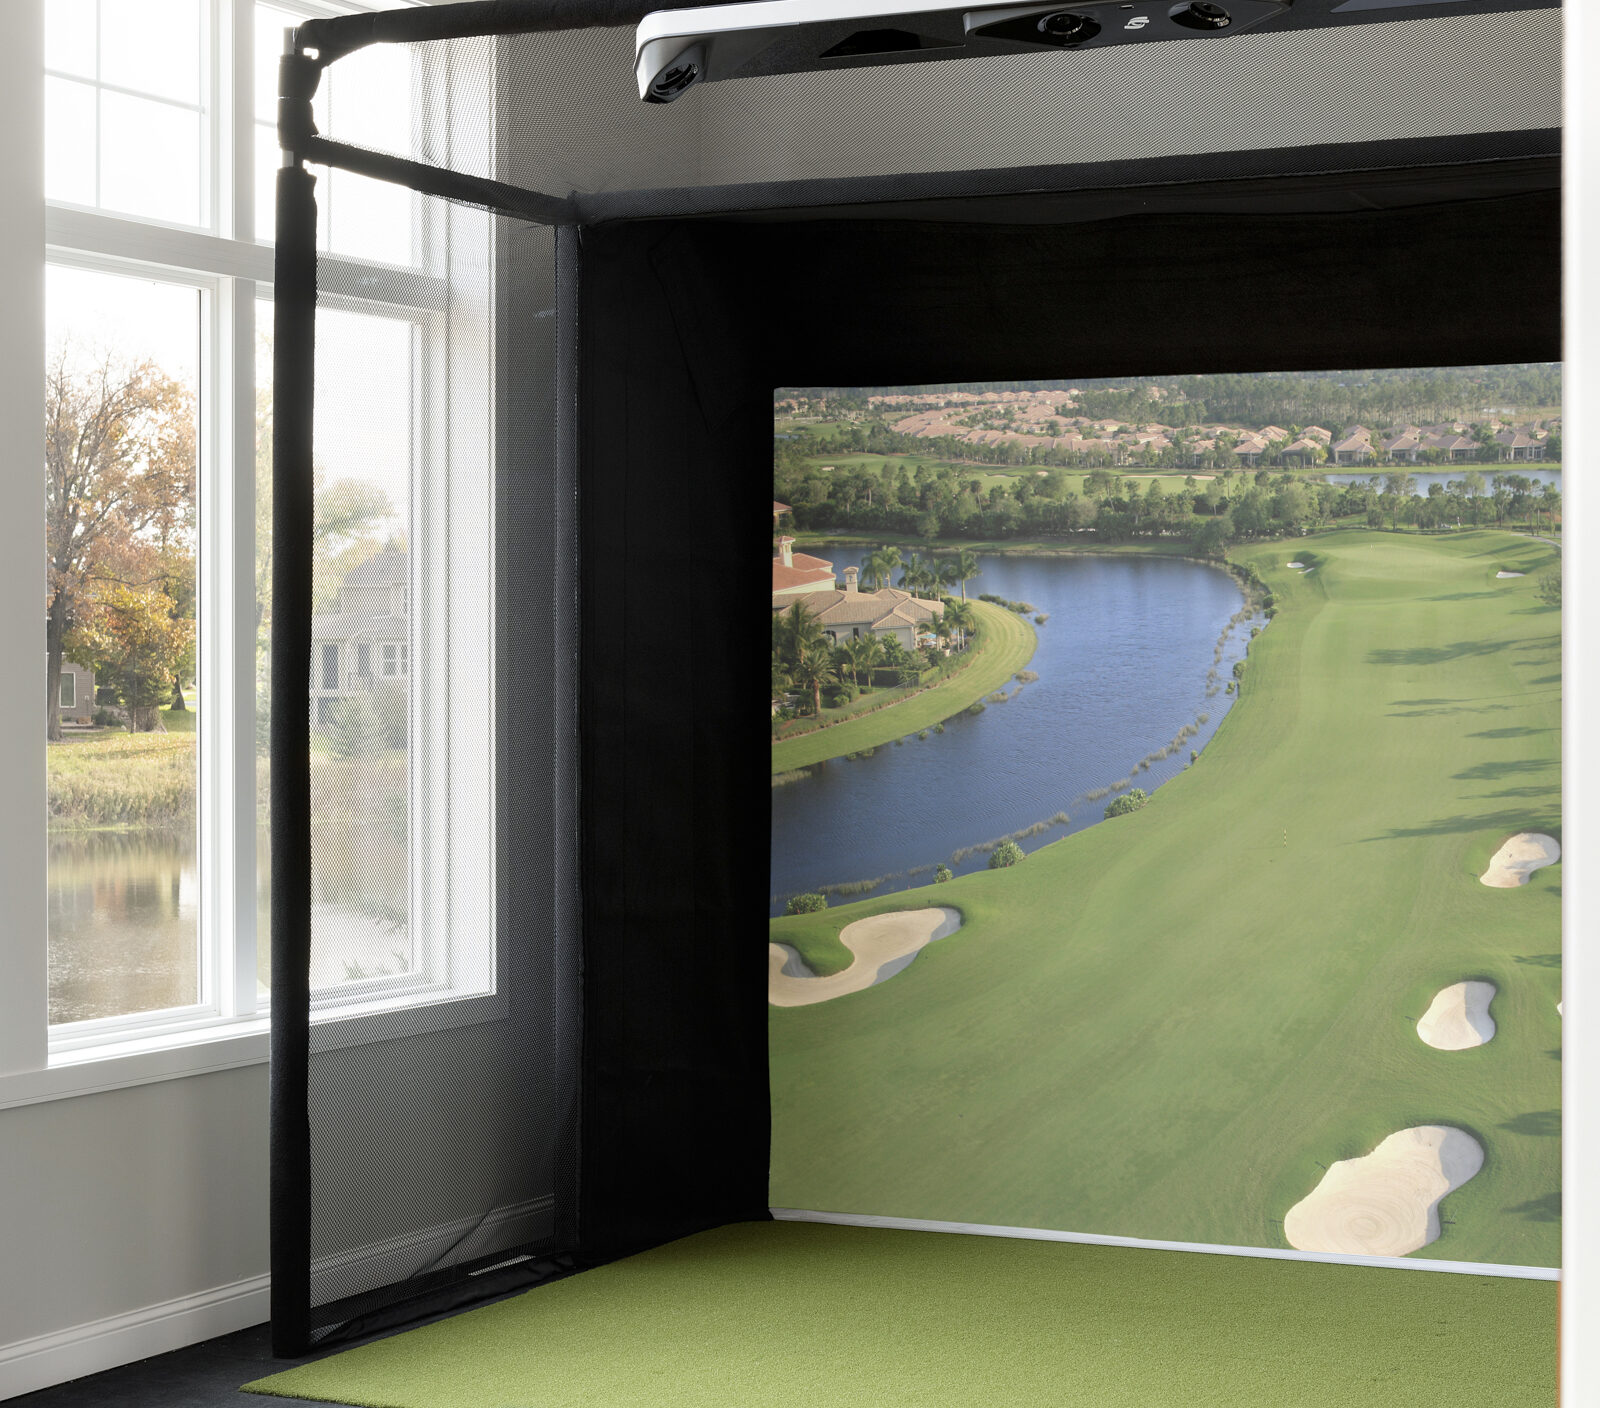 Golf Simulator, sports court addition | construction2style